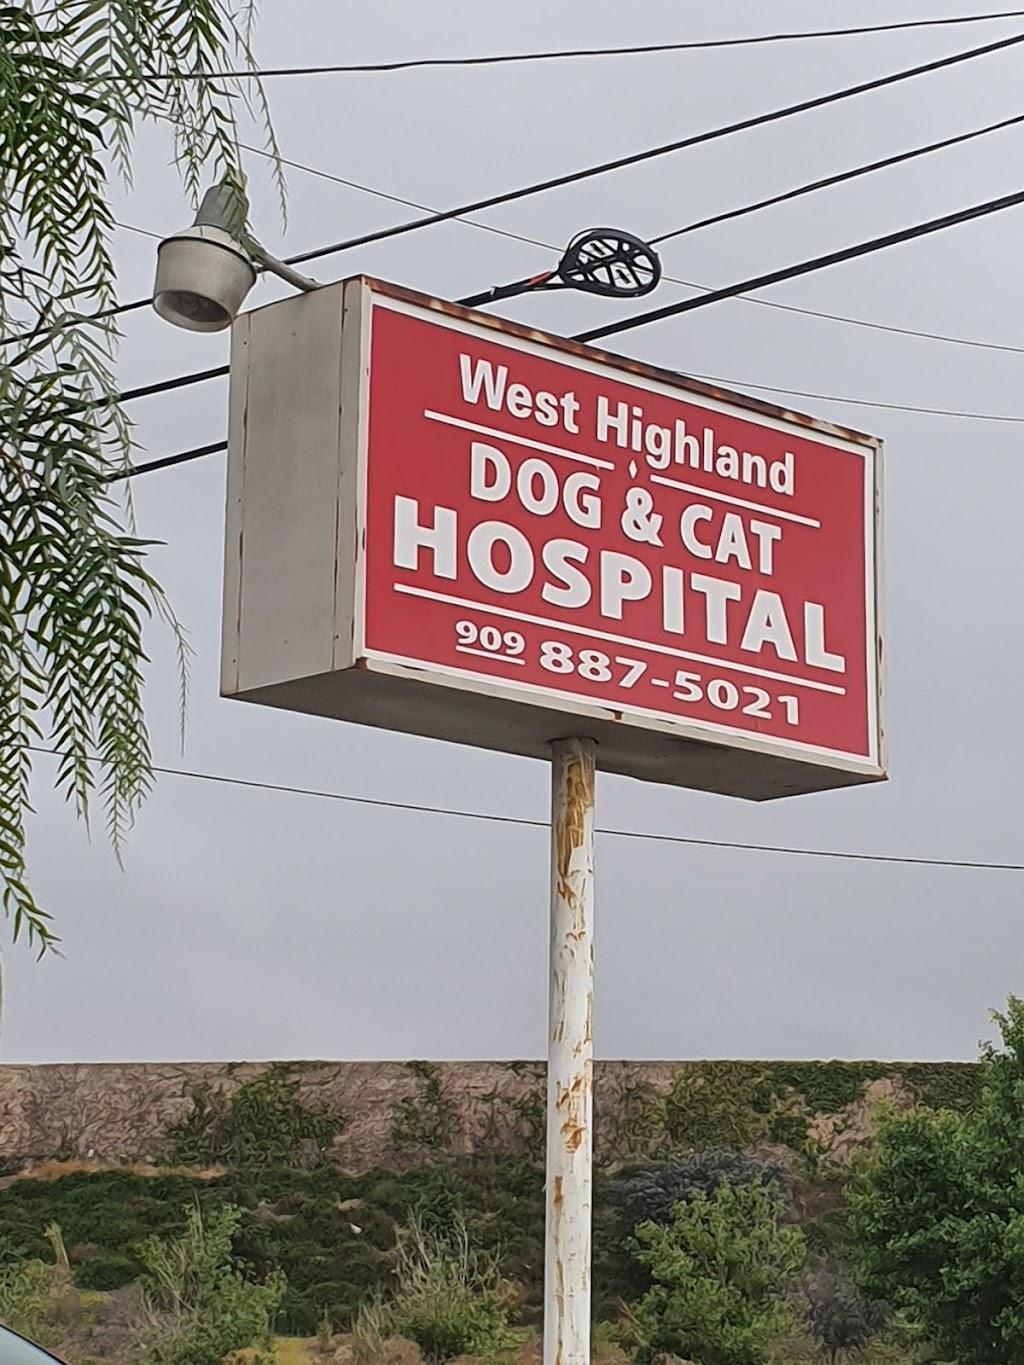 West Highland Dog & Cat Hospital | 1795 W Highland Ave, San Bernardino, CA 92411 | Phone: (909) 887-5021